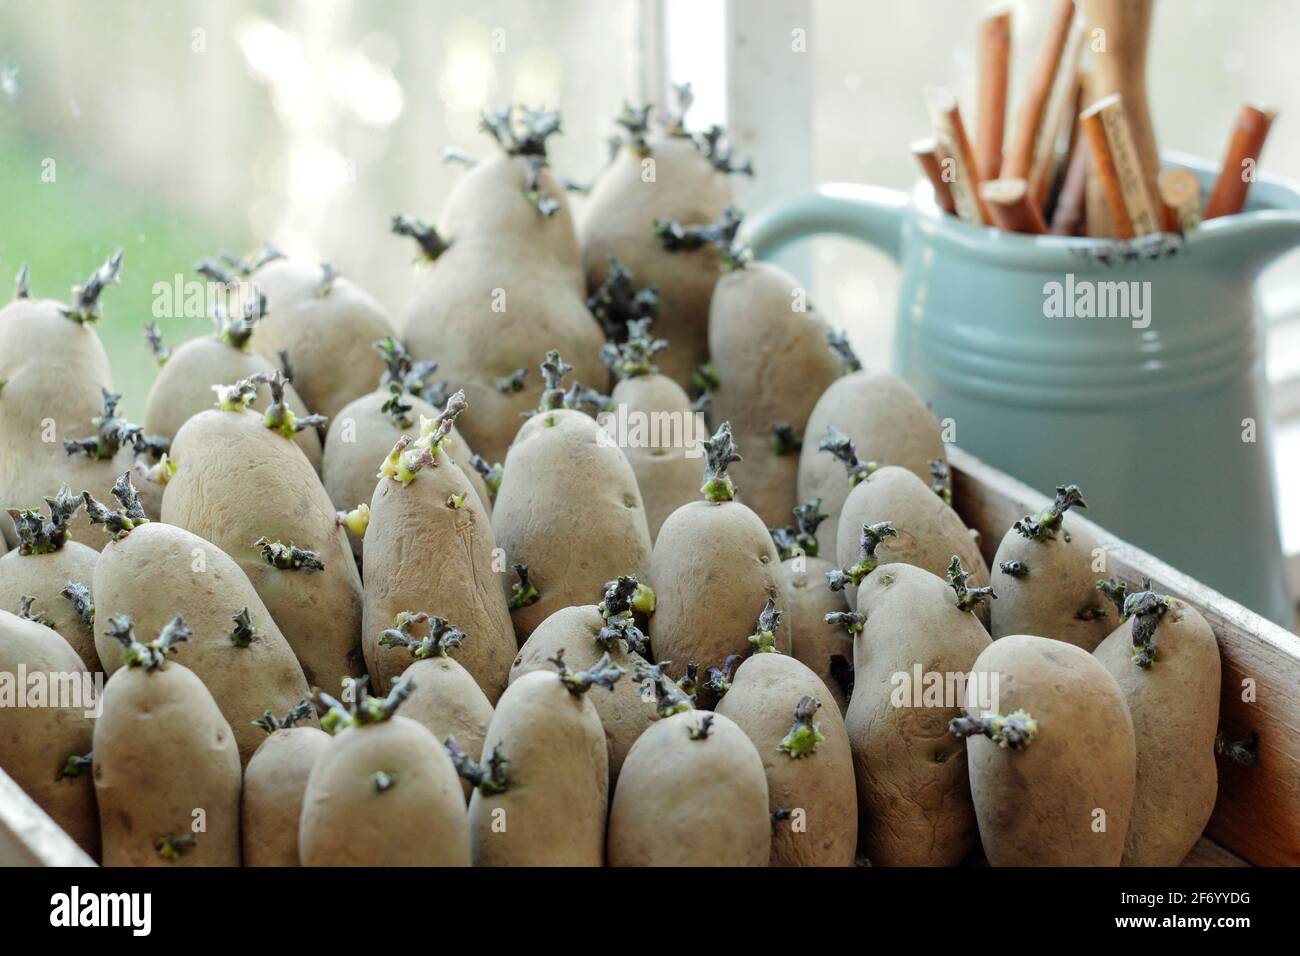 Im Frühjahr auf einer warmen Fensterbank kitzeln. Solanum tuberosum 'Ratte' potatoesUK. Stockfoto